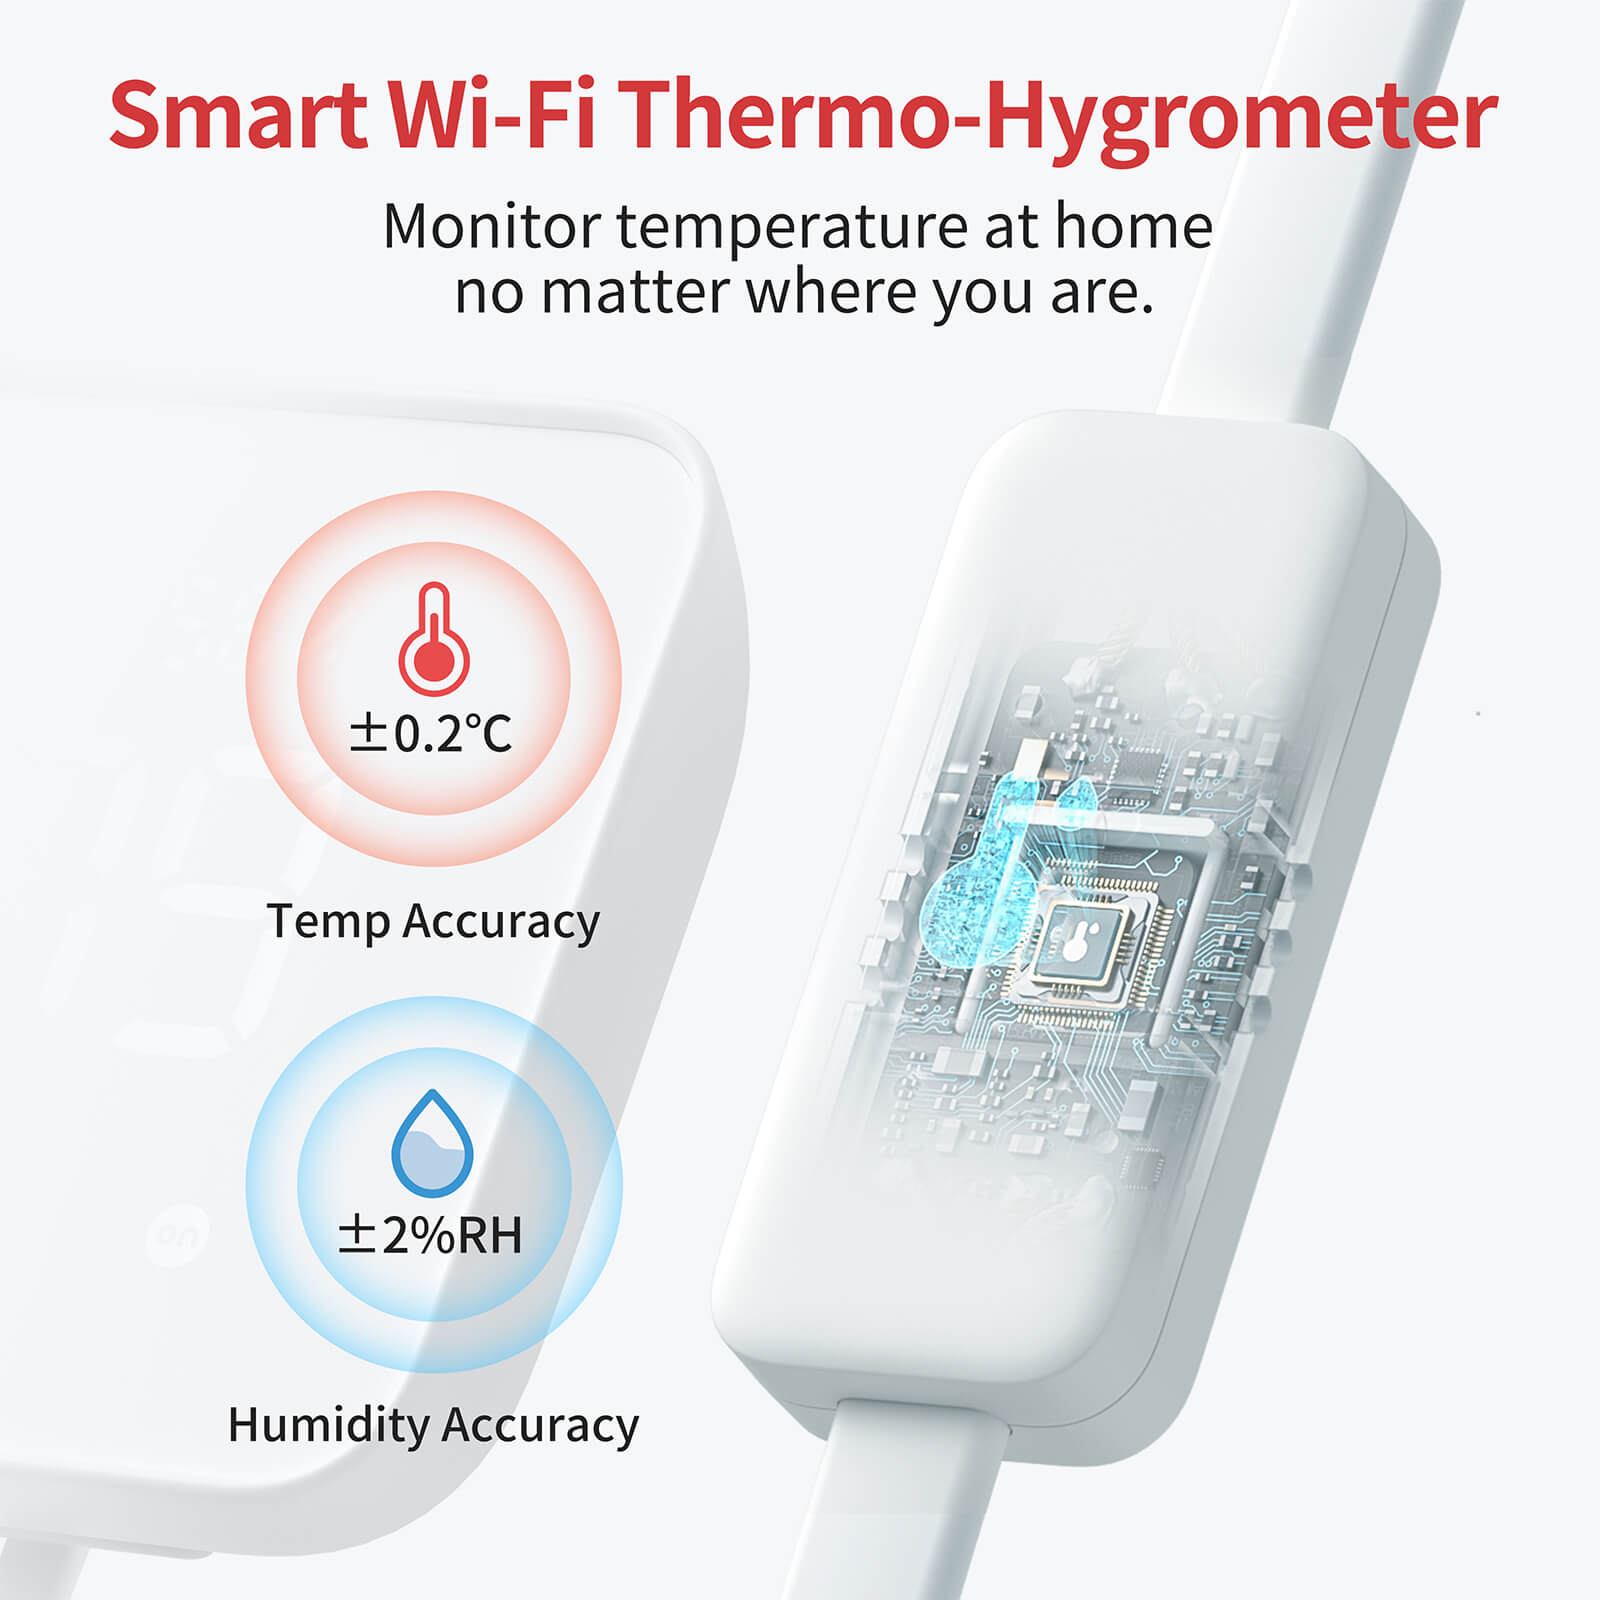 XIAOMI Bluetooth Thermometer Hygrometer 2 Temperature Humidity Sensor+APP  1/3/5